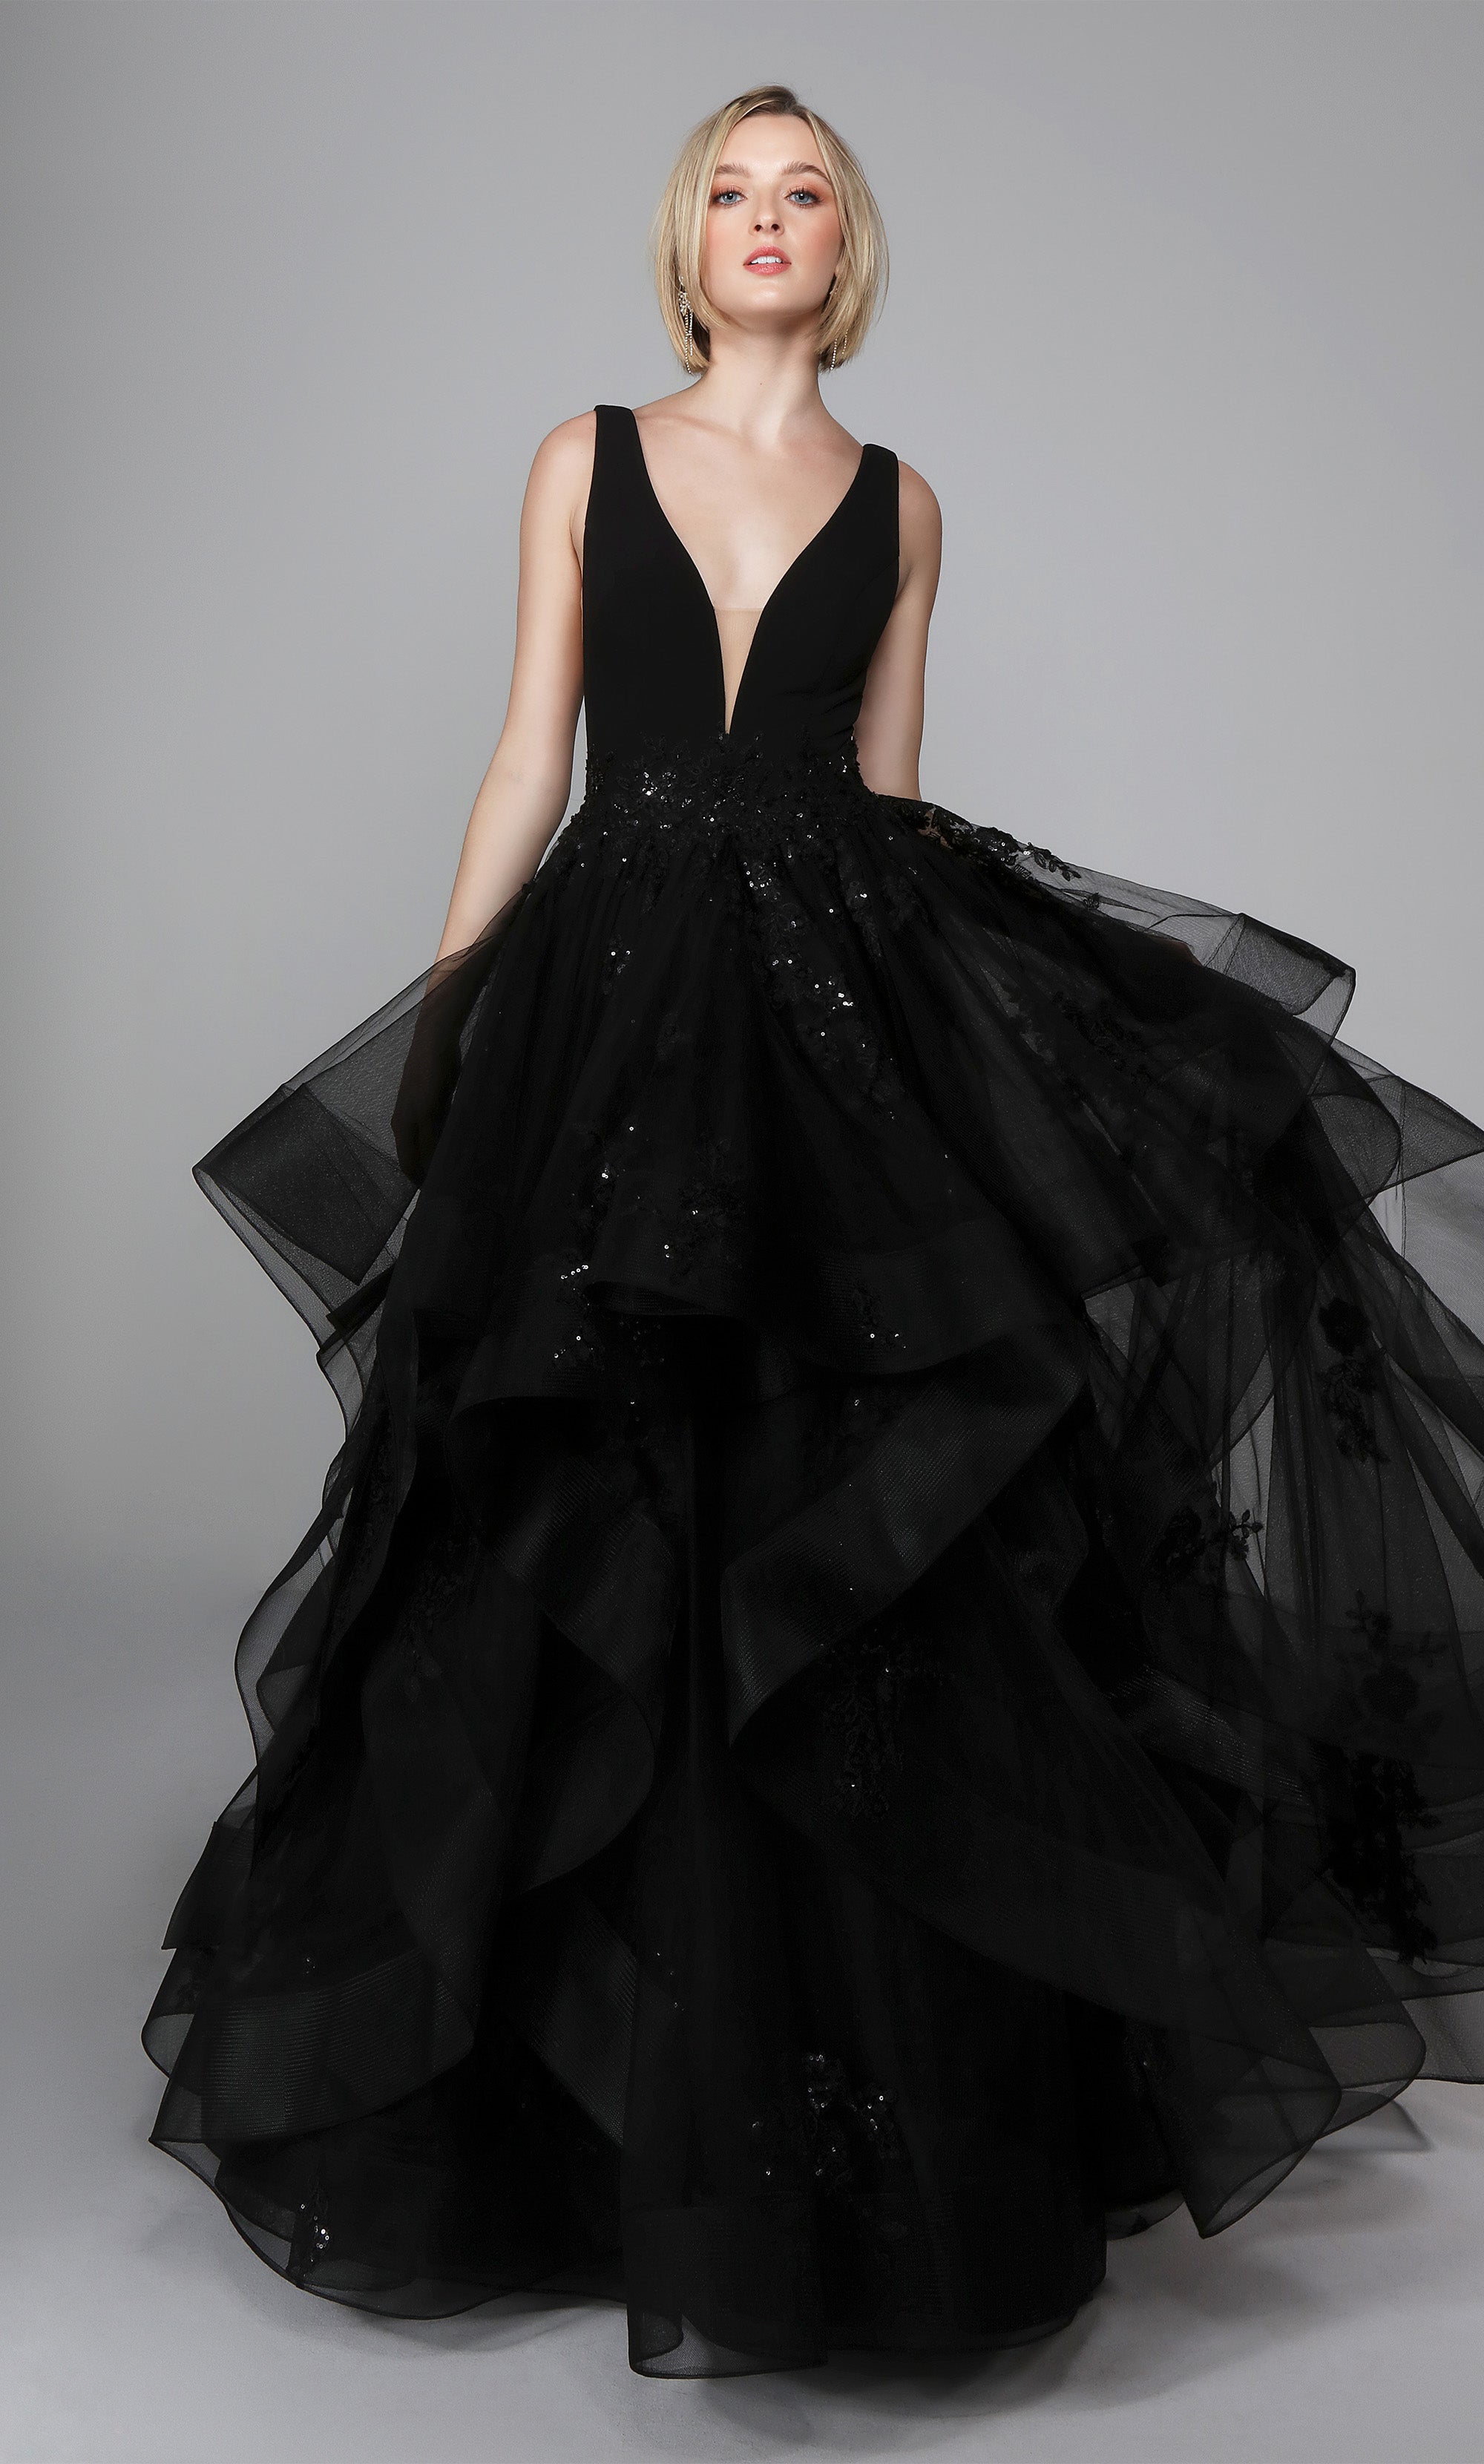 Black Gothic Shining Princess Ball Gown Wedding Dress - Devilnight.co.uk